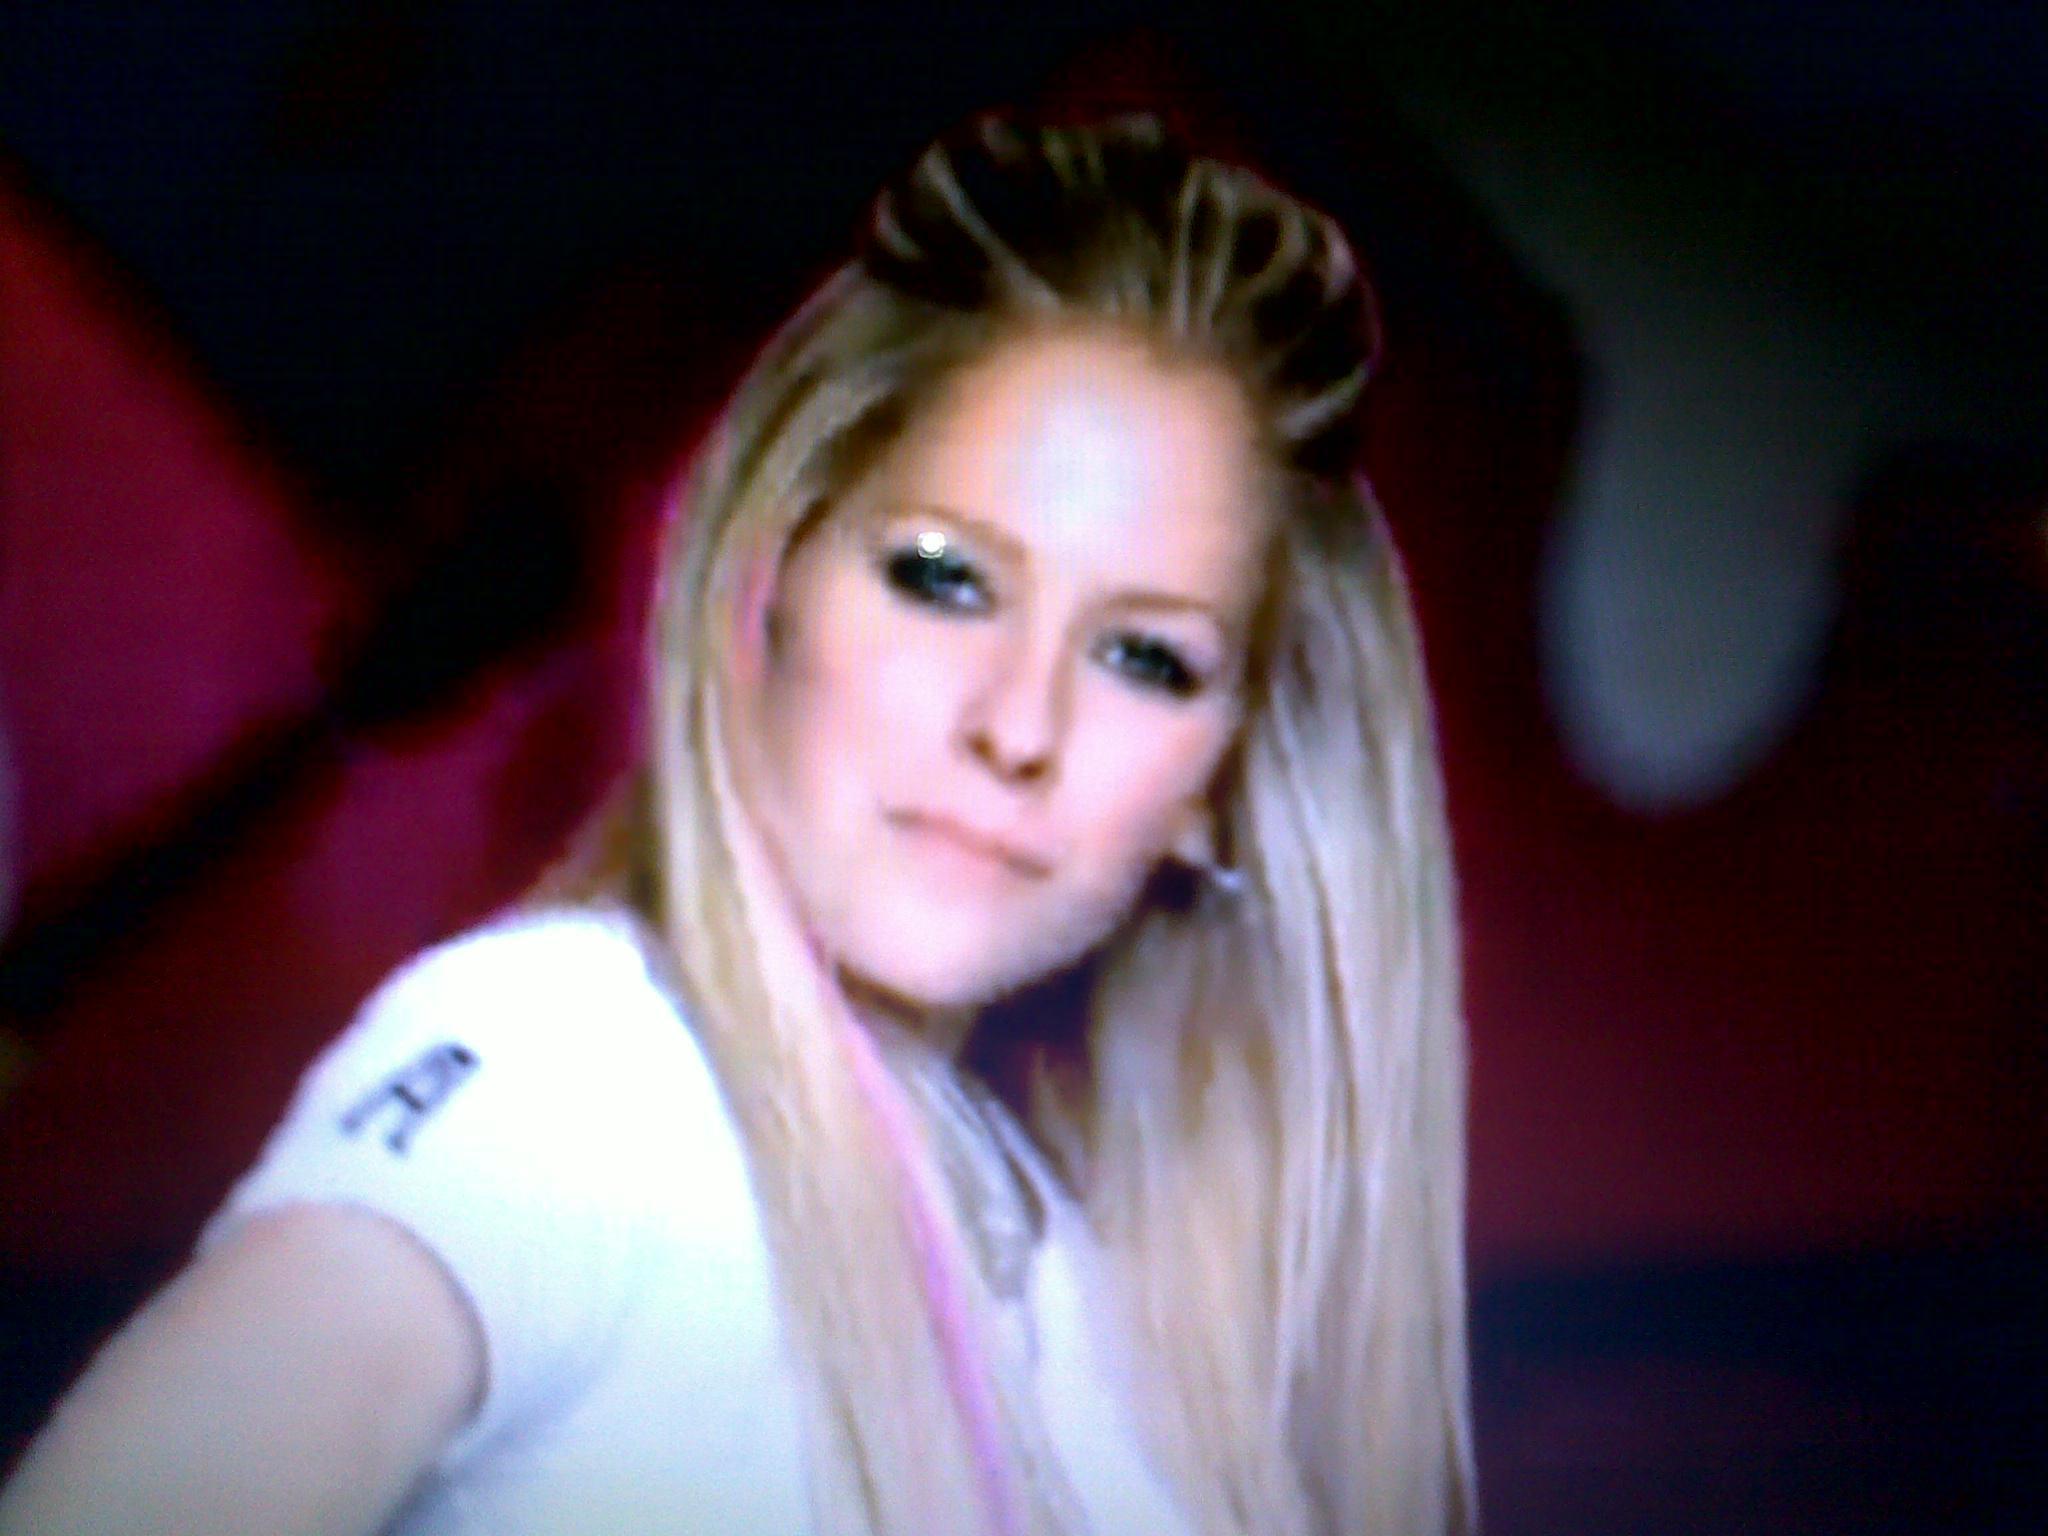 Music video - Girlfriend - Avril Lavigne Image (16184150) - Fanpop